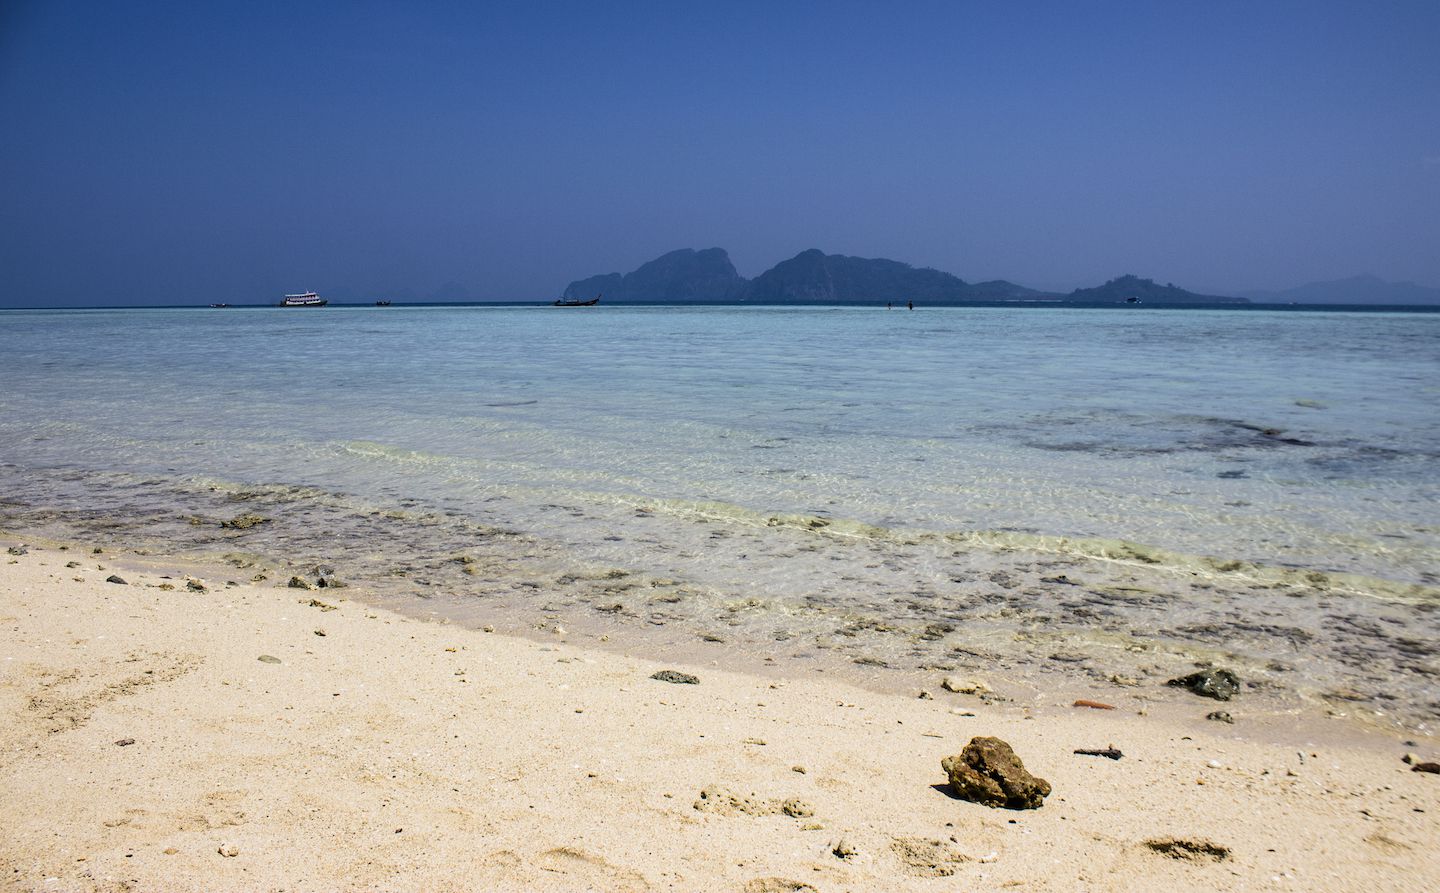 View of the idyllic beach on Koh Kradan, Thailand